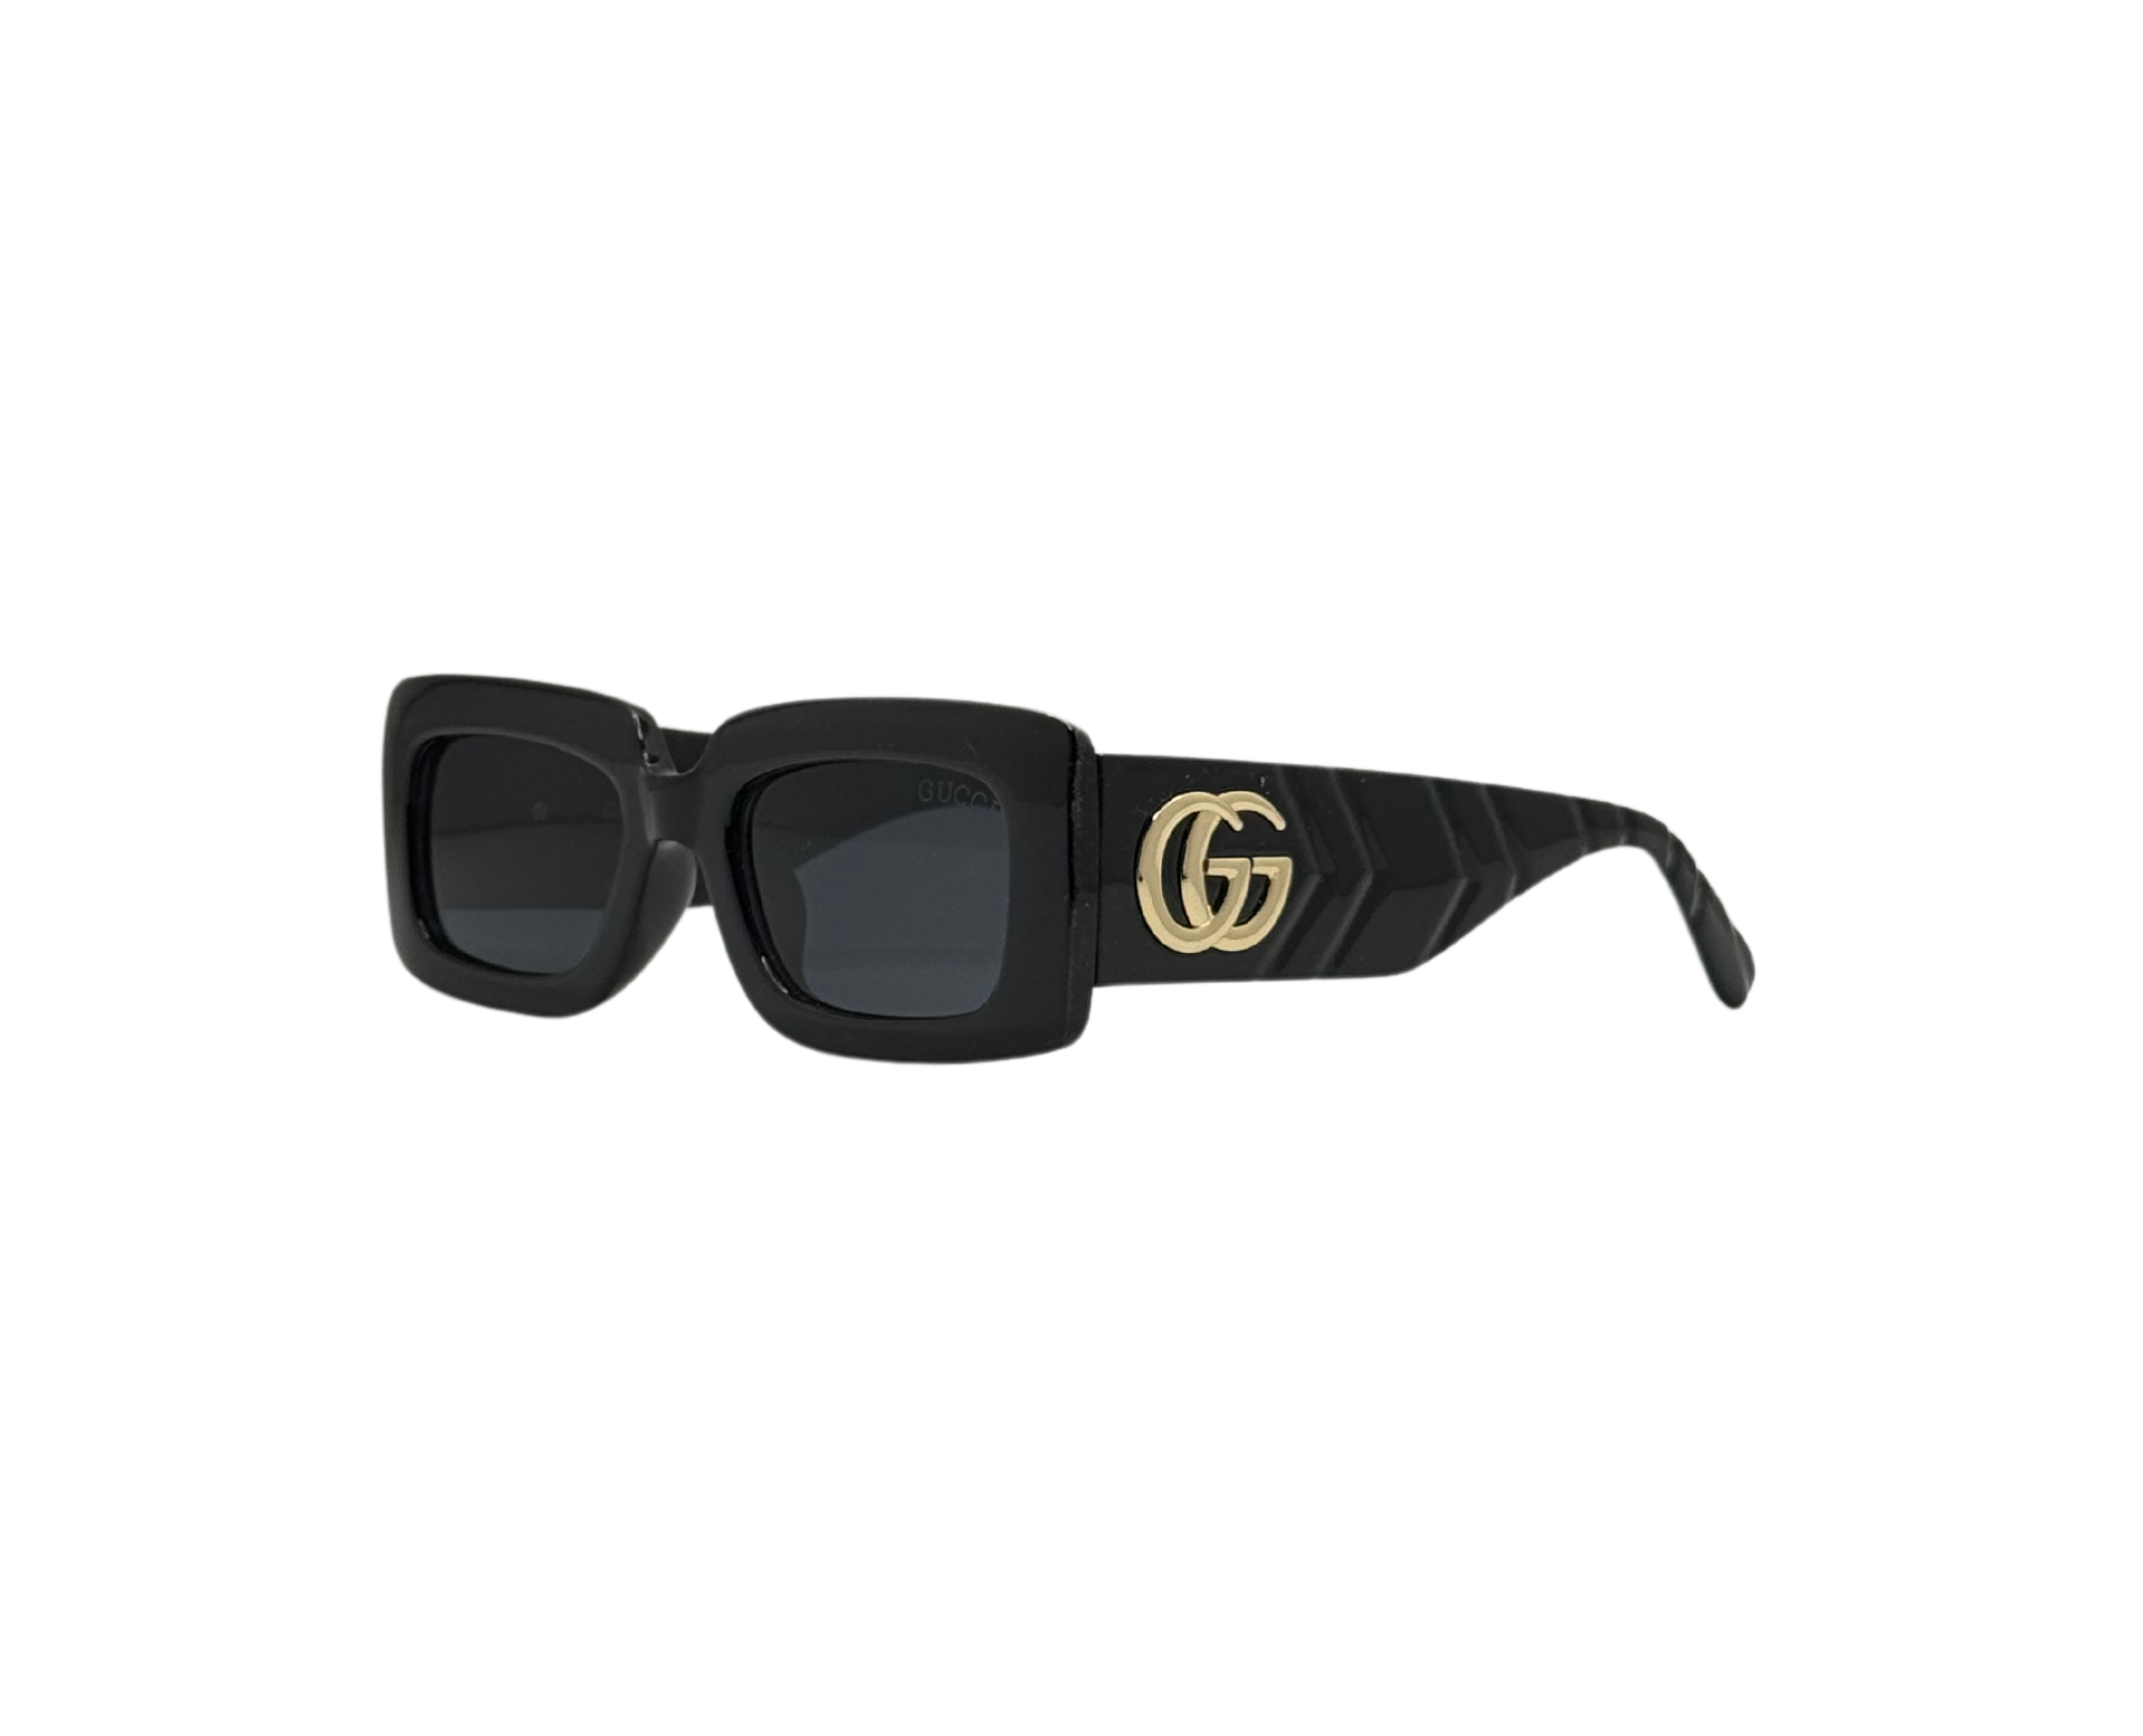 NS Deluxe - 53001 - Black - Sunglasses